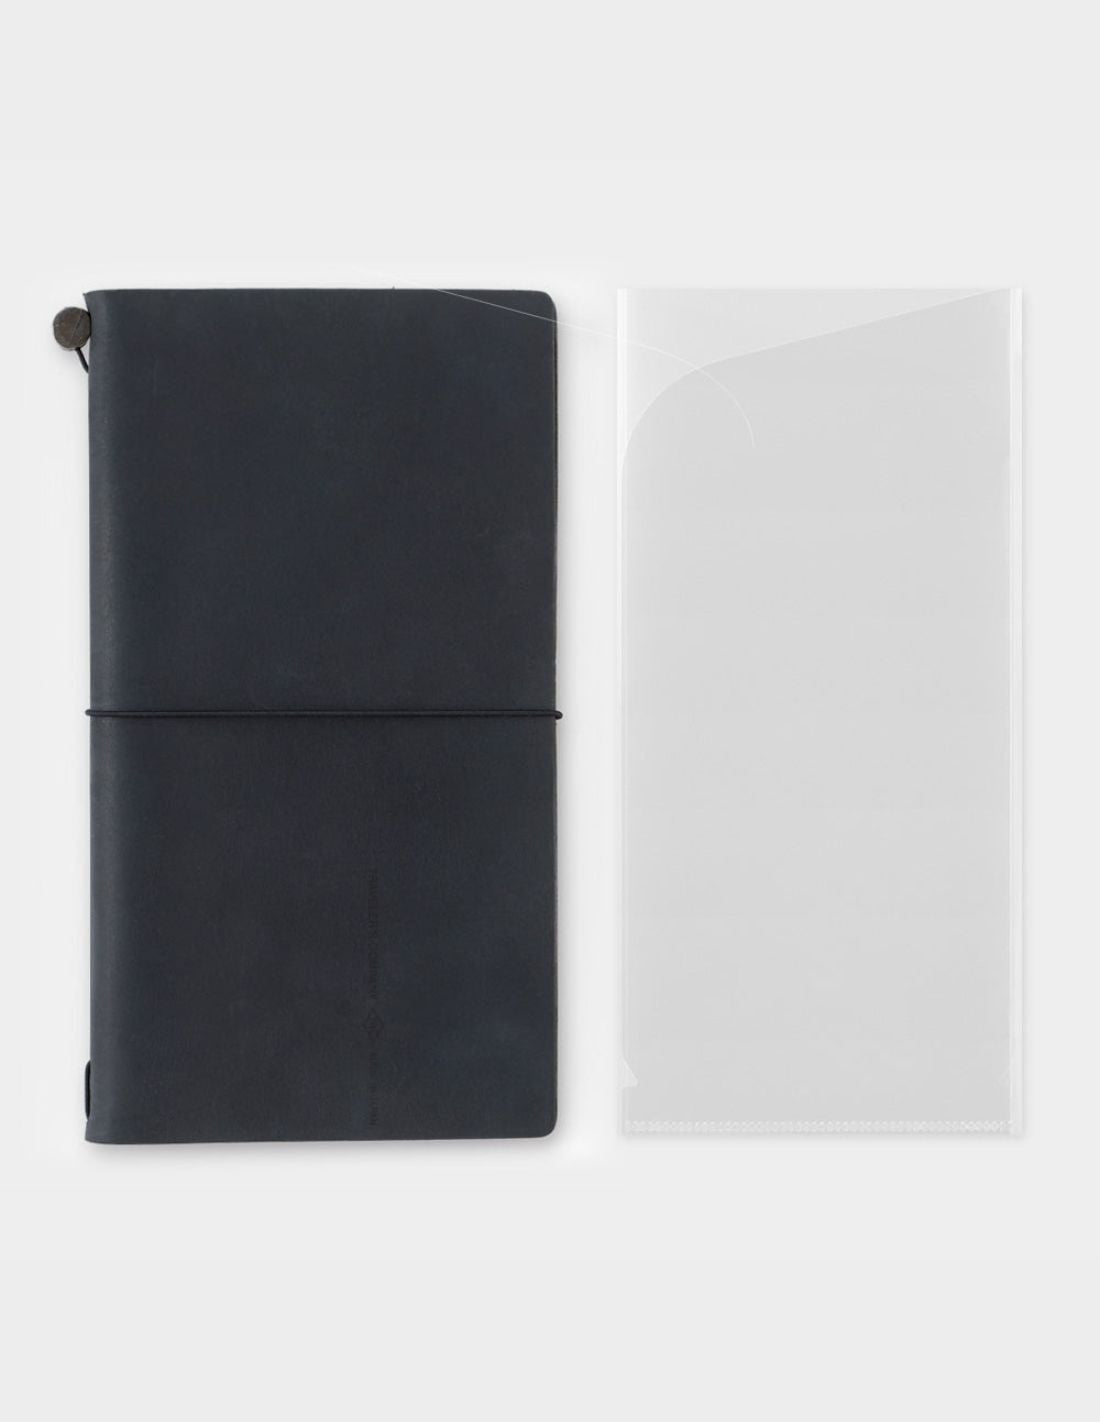 TRAVELER'S notebook 029 - pochette 3 rabats (regular size) - TN Regular size - - 4902805144032